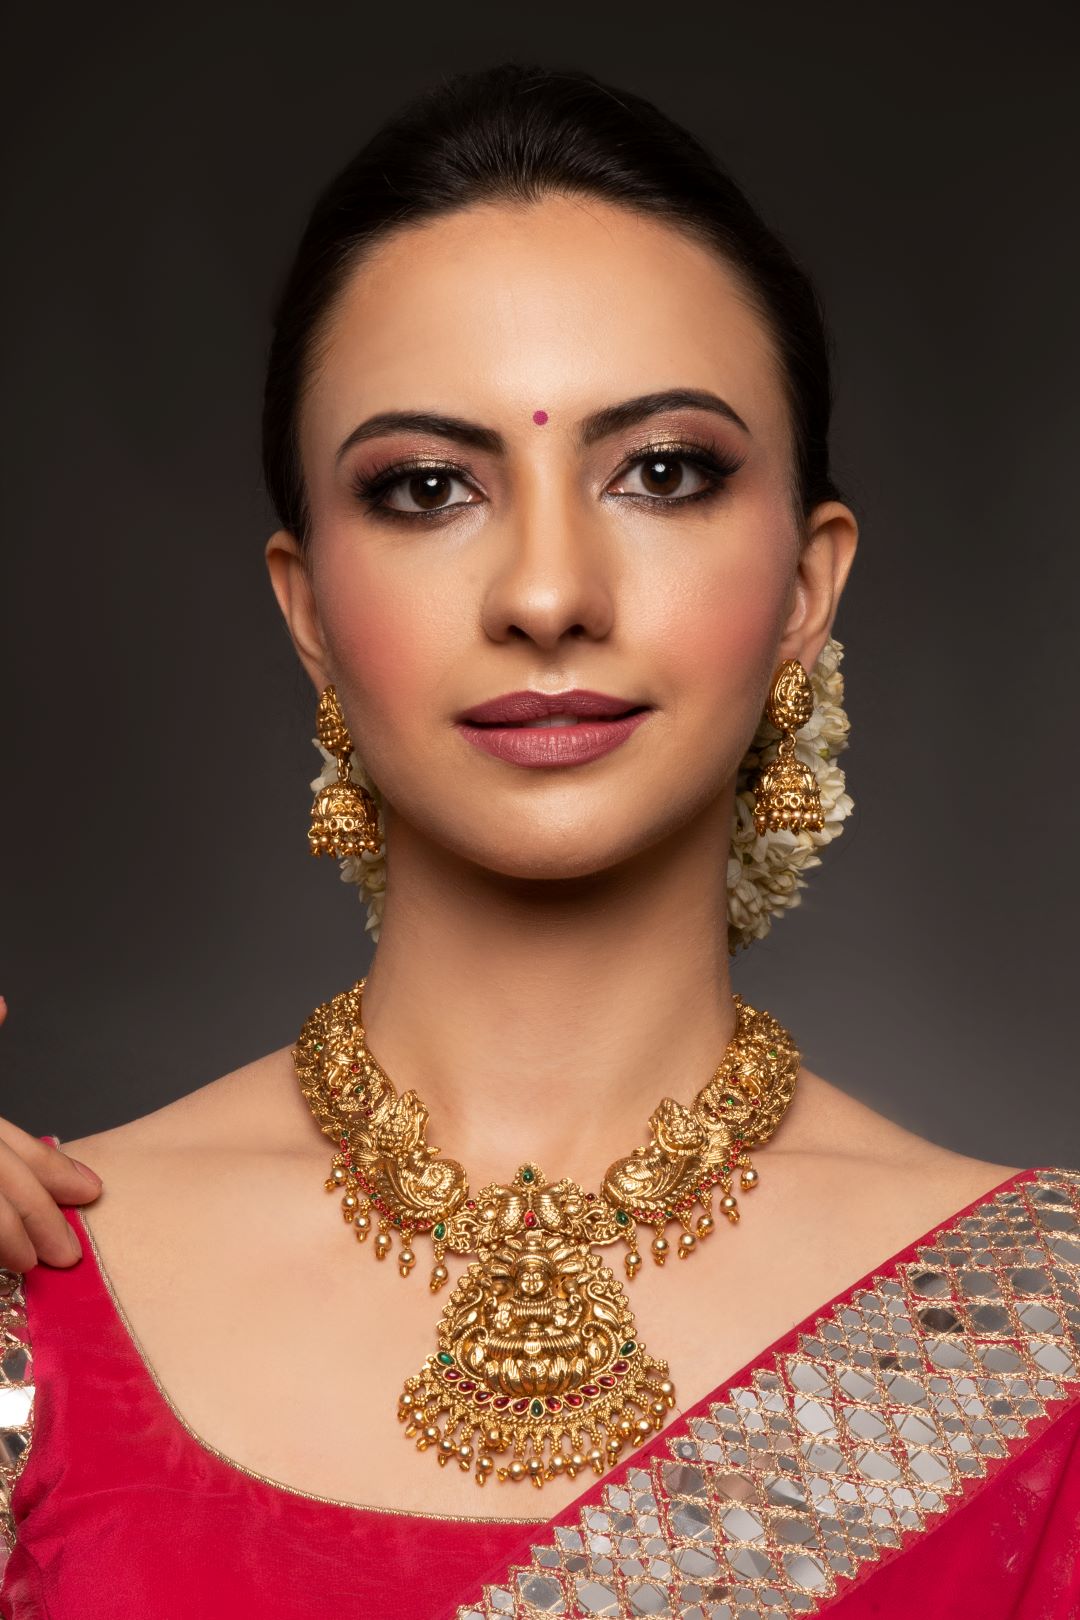 Meher Lakshmi Motif Temple Necklace Set with Earrings - QUEENS JEWELS